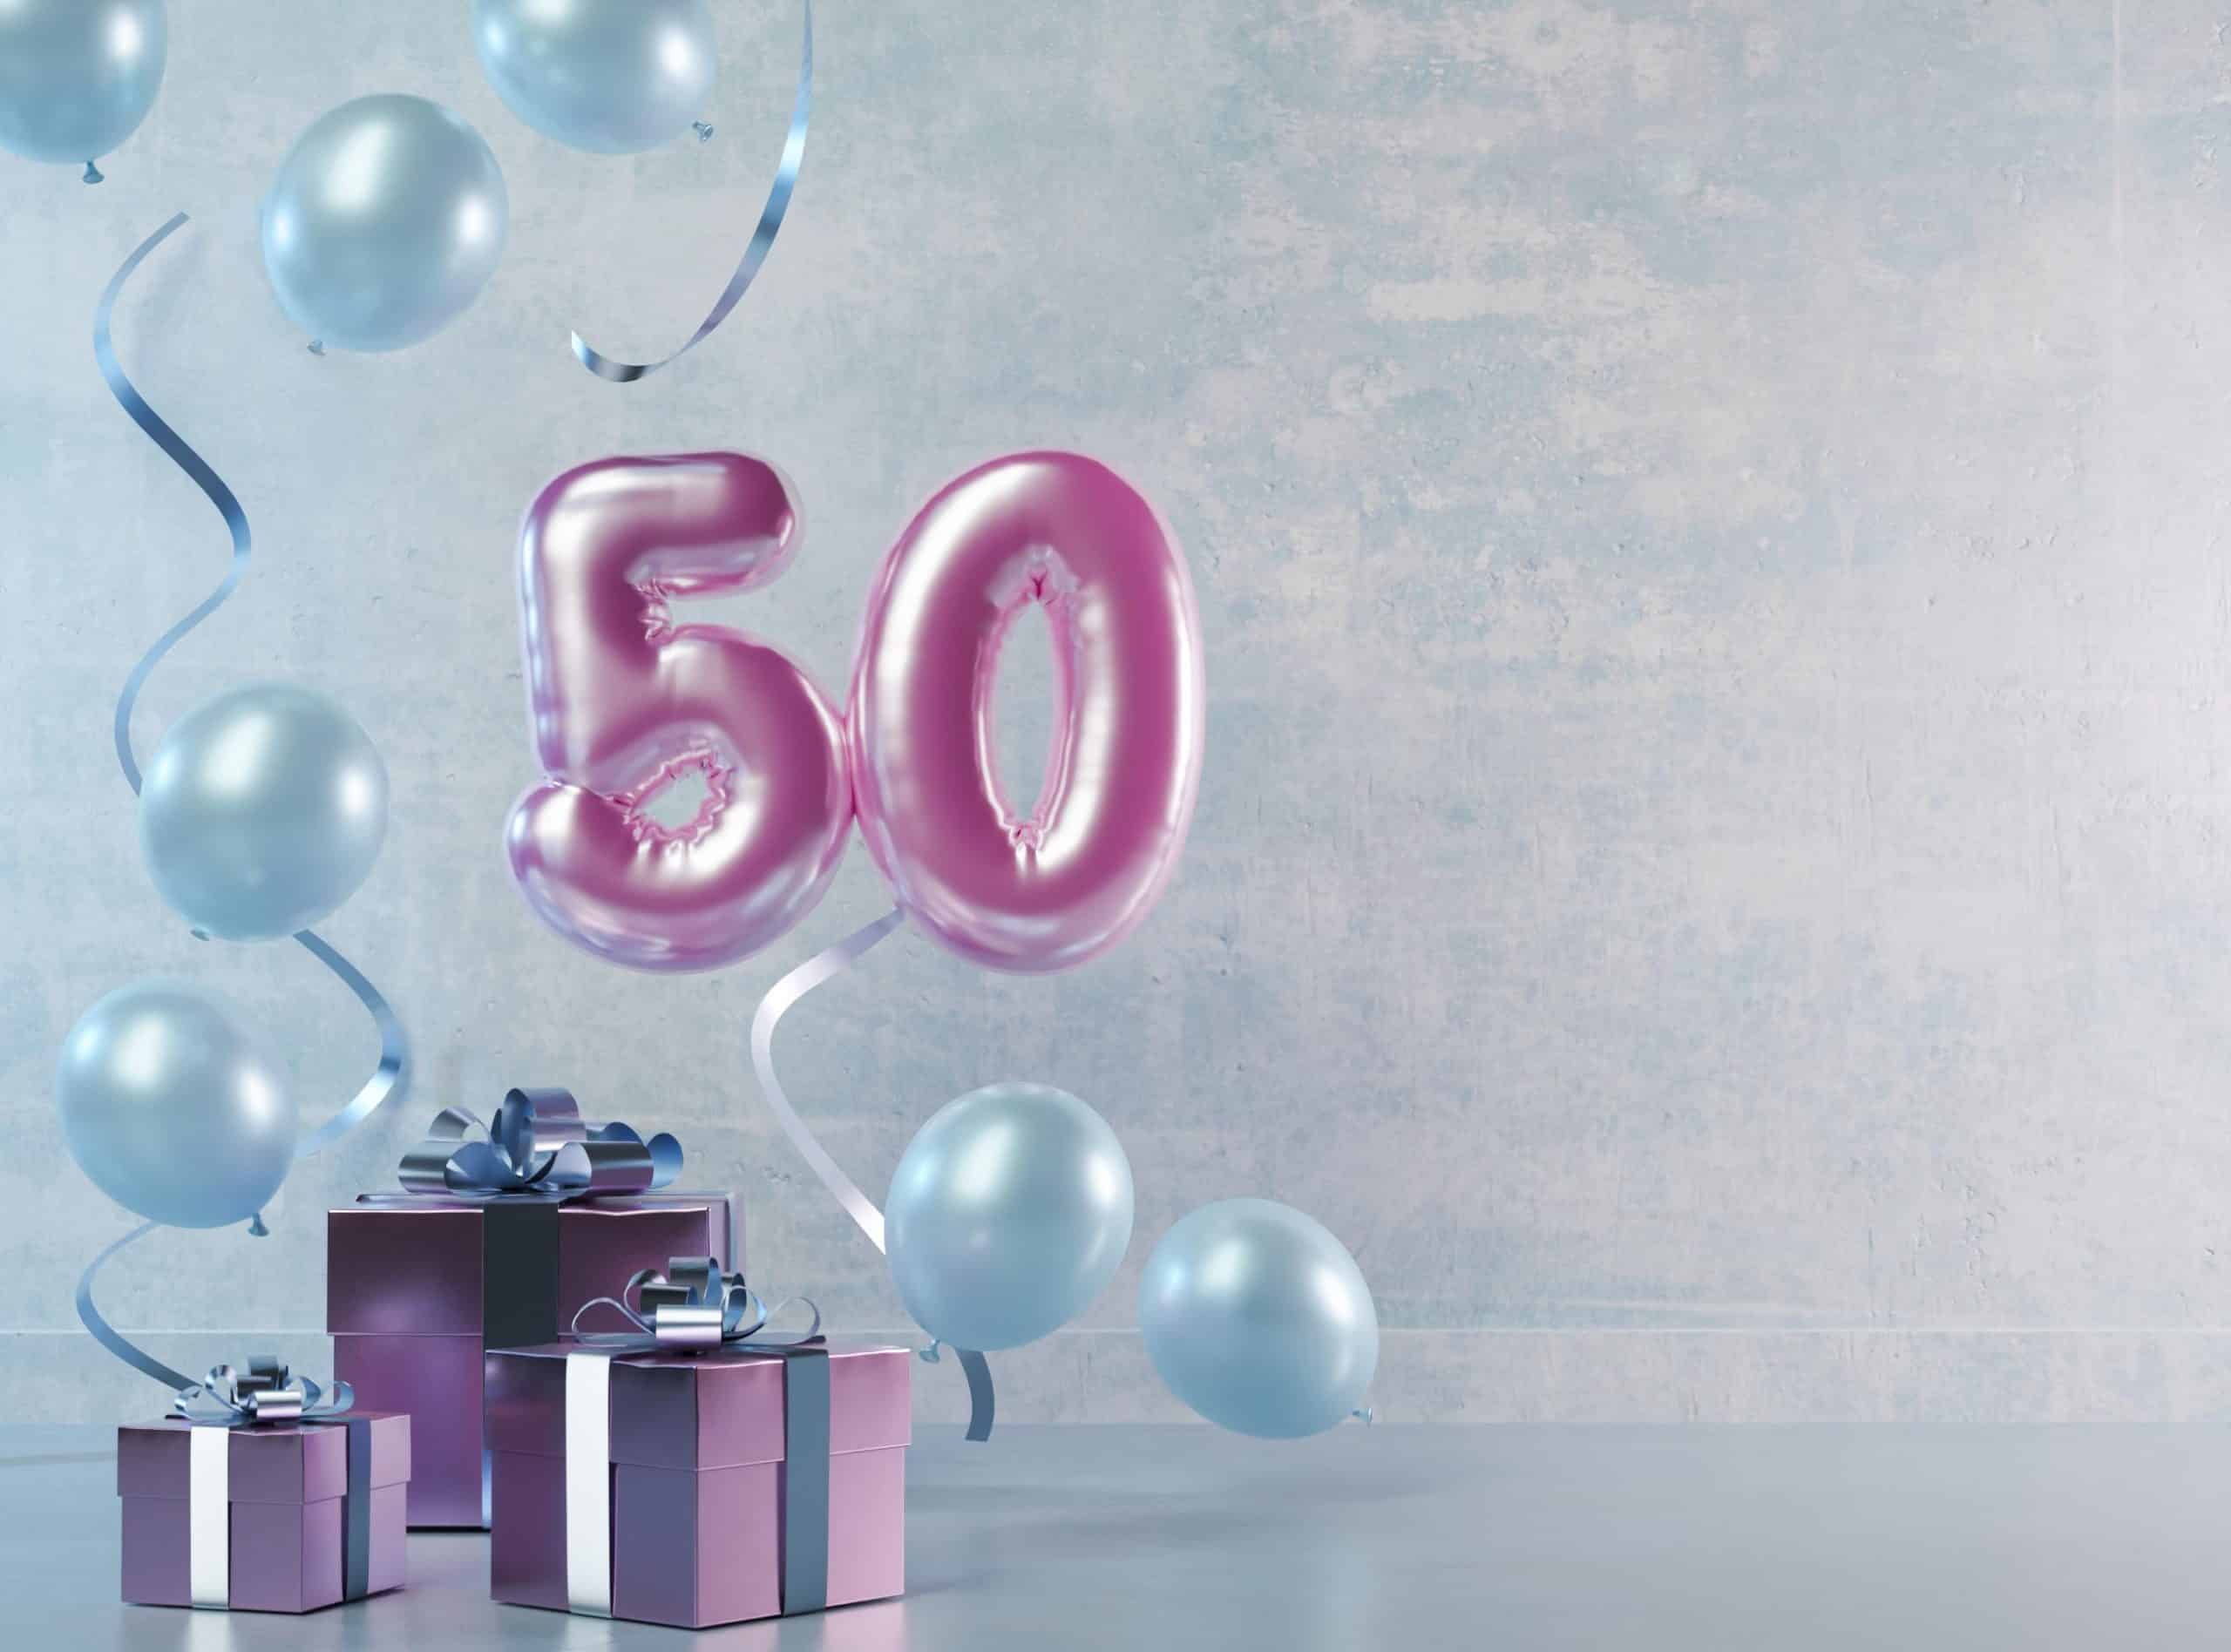 Montajes para 50 cumpleaños